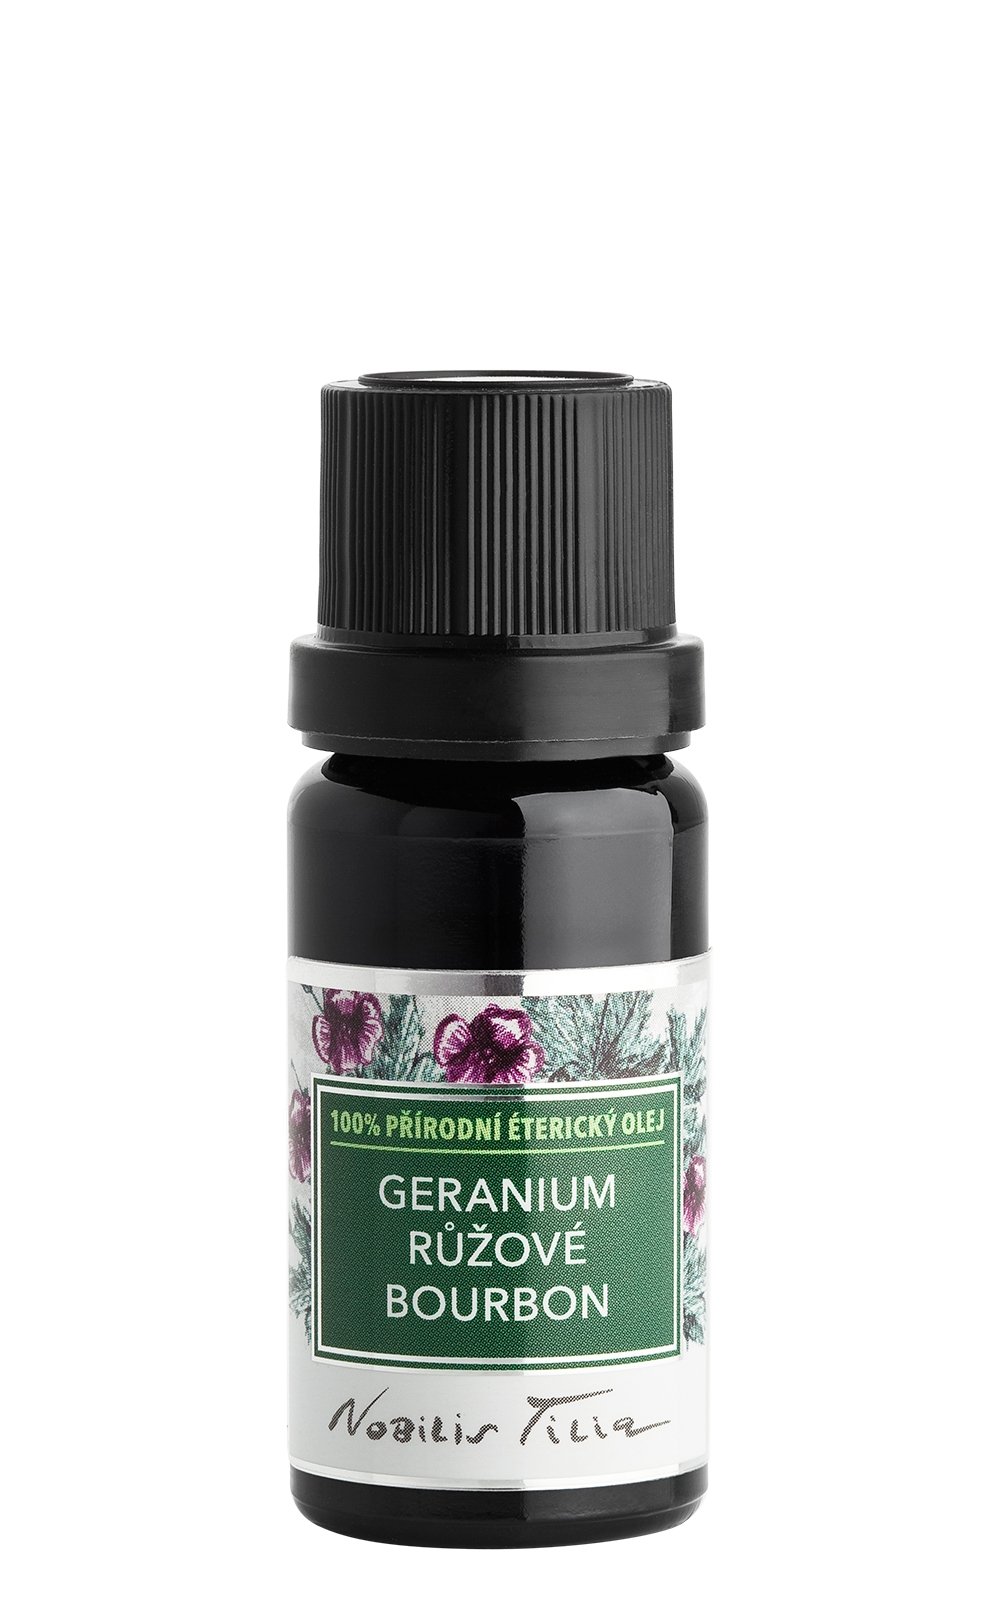 Éterický olej Geranium růžové, bourbon